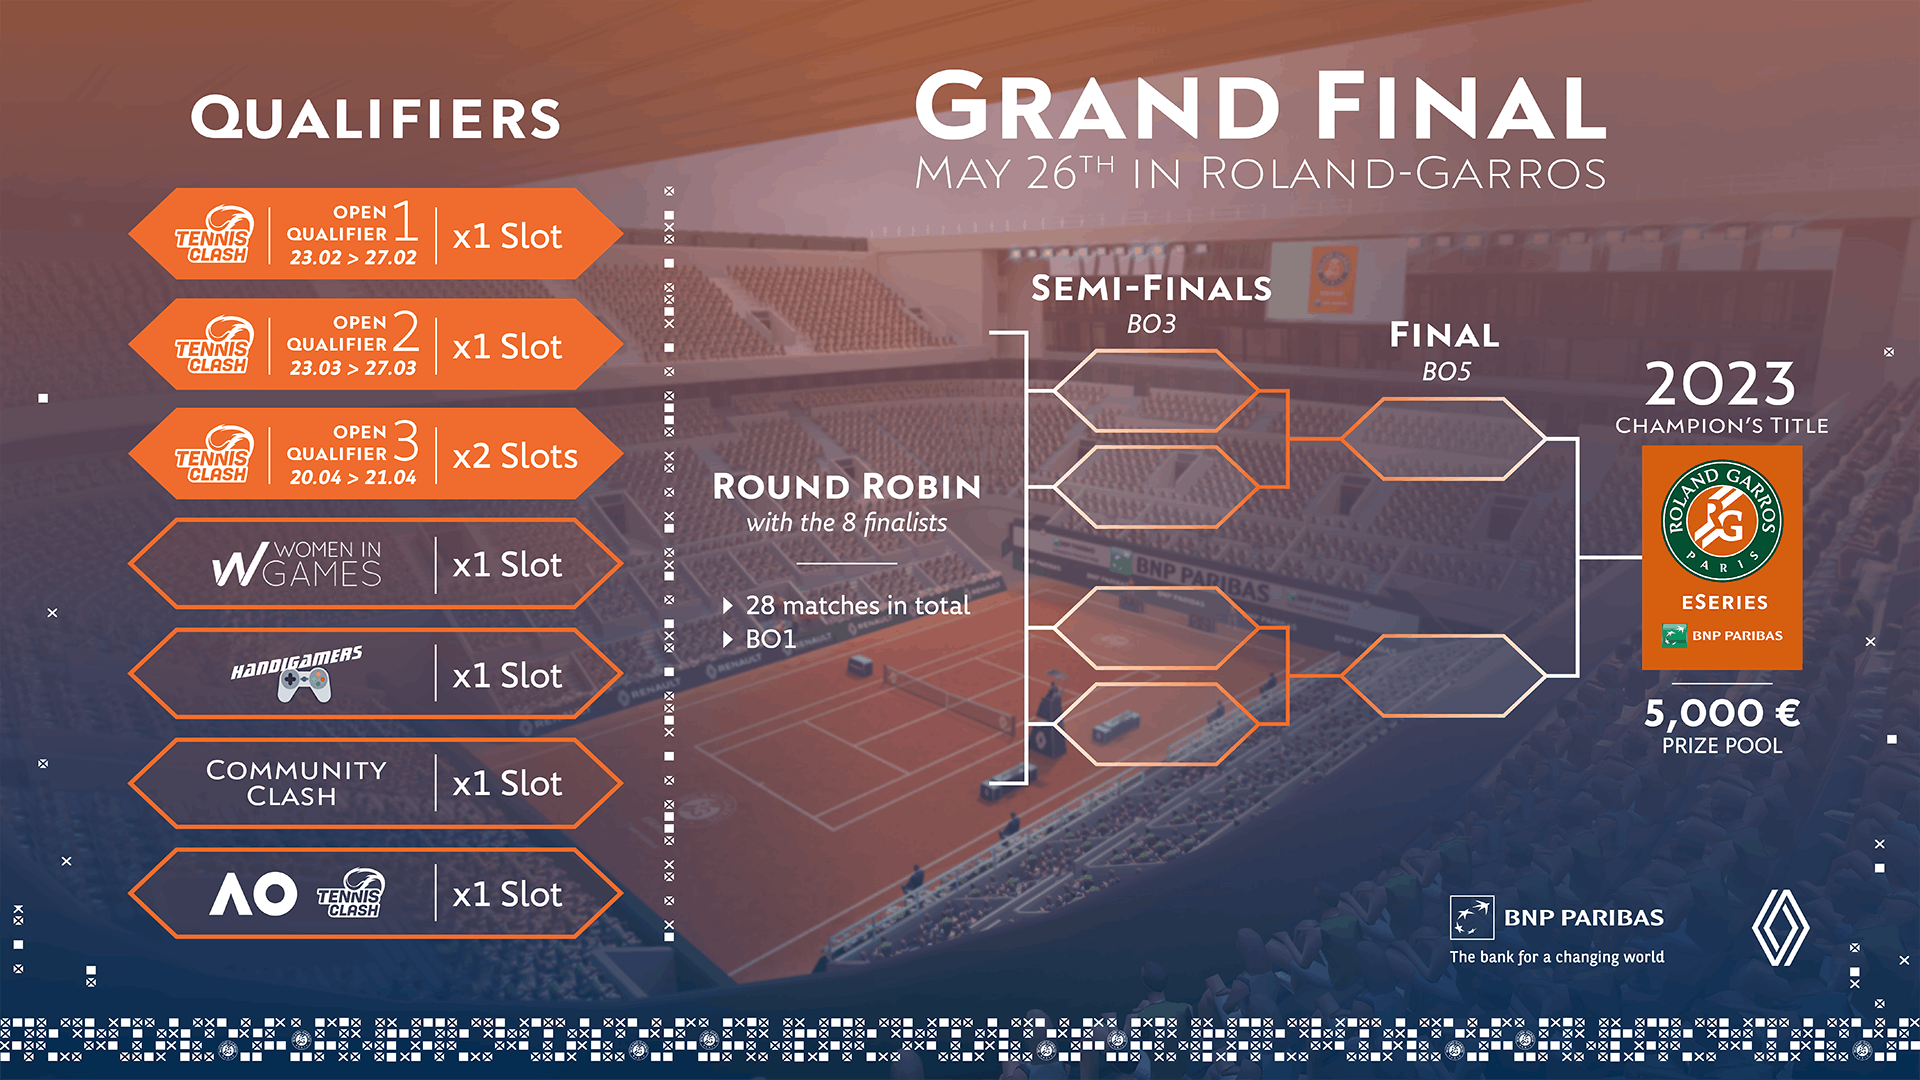 Draw Roland-Garros eSeries by BNP Paribas 2023